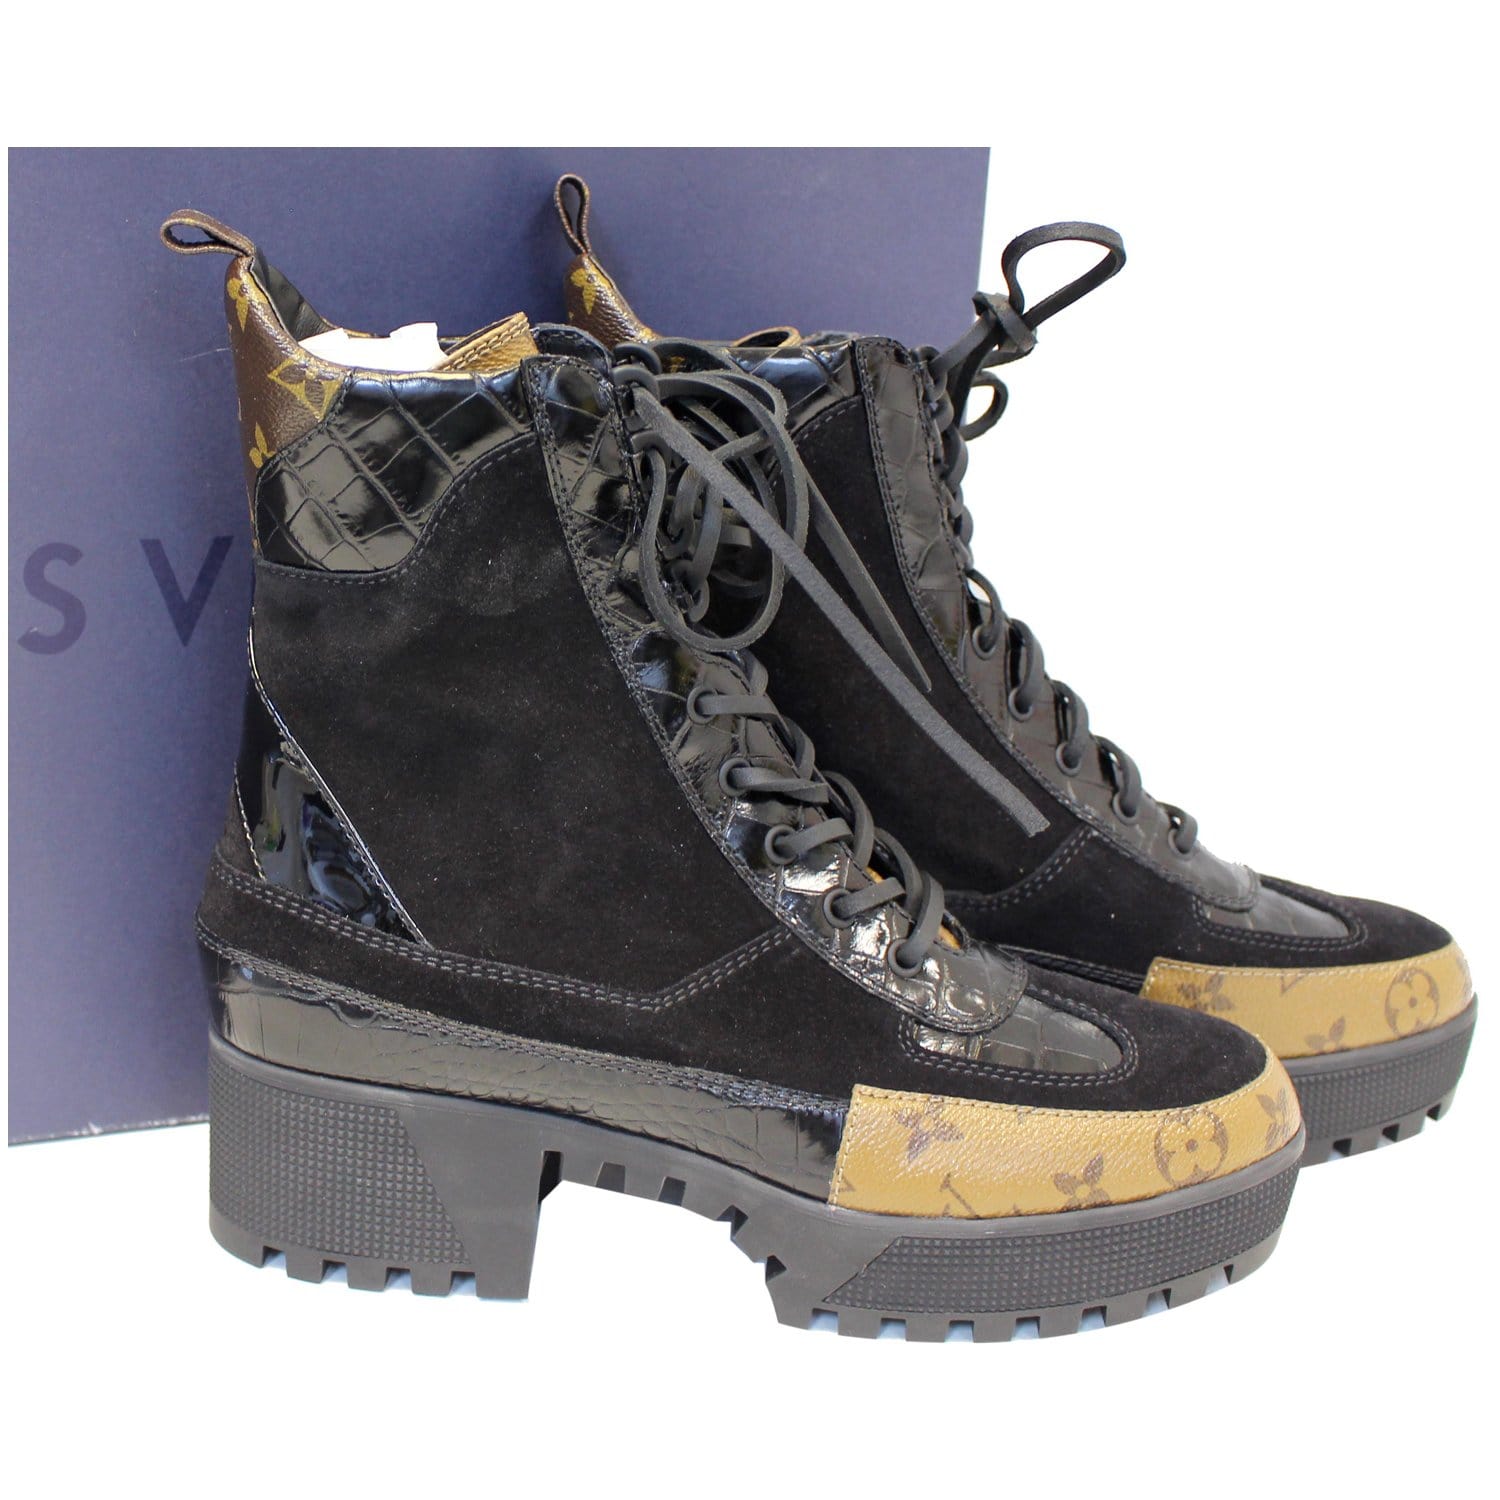 Louis Vuitton Desert Boot Look Alike